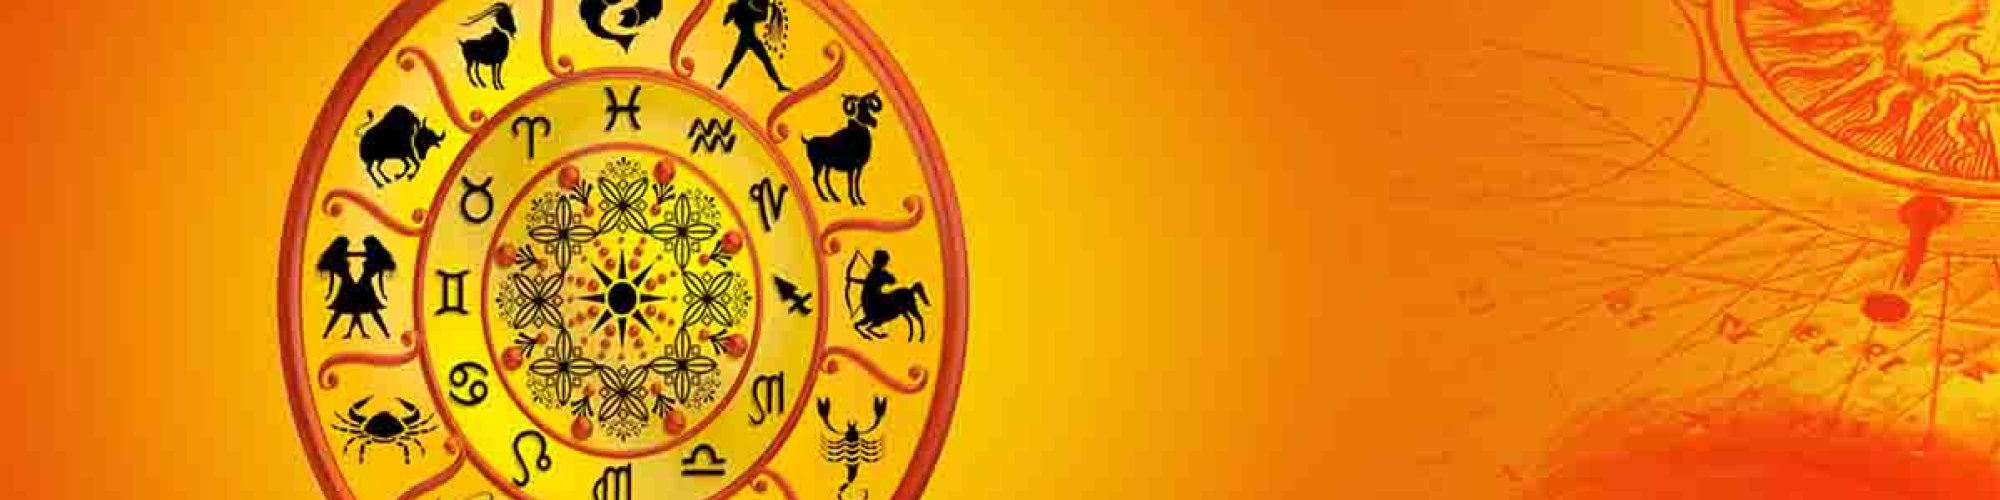 Best Famous online astrologer in Bangalore